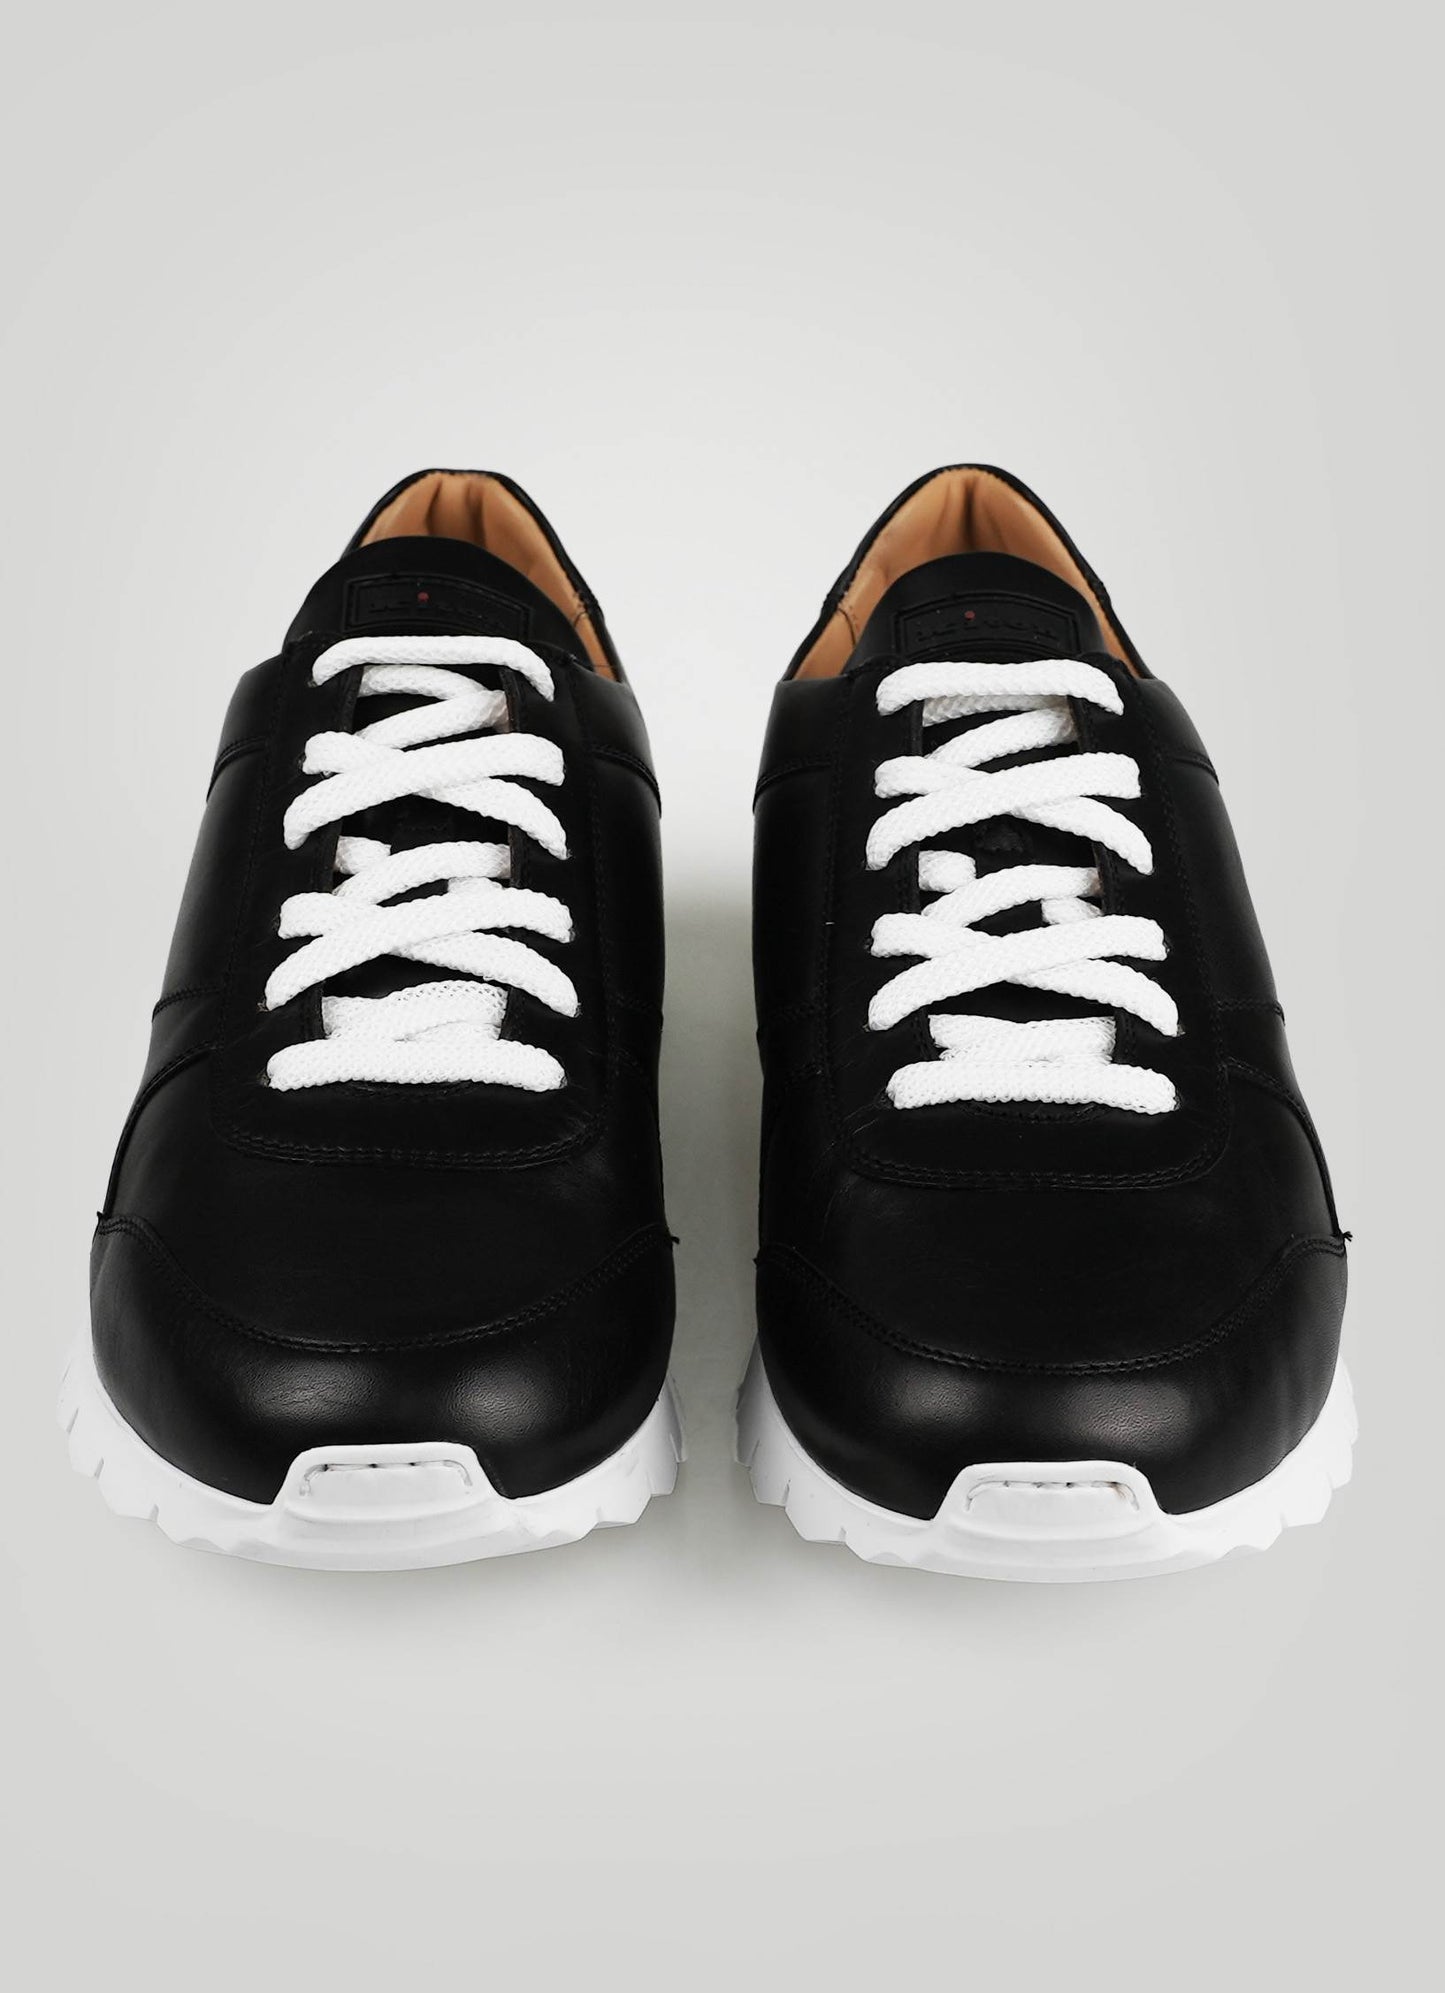 Kiton Black Leather Fur Sheepskin Sneakers